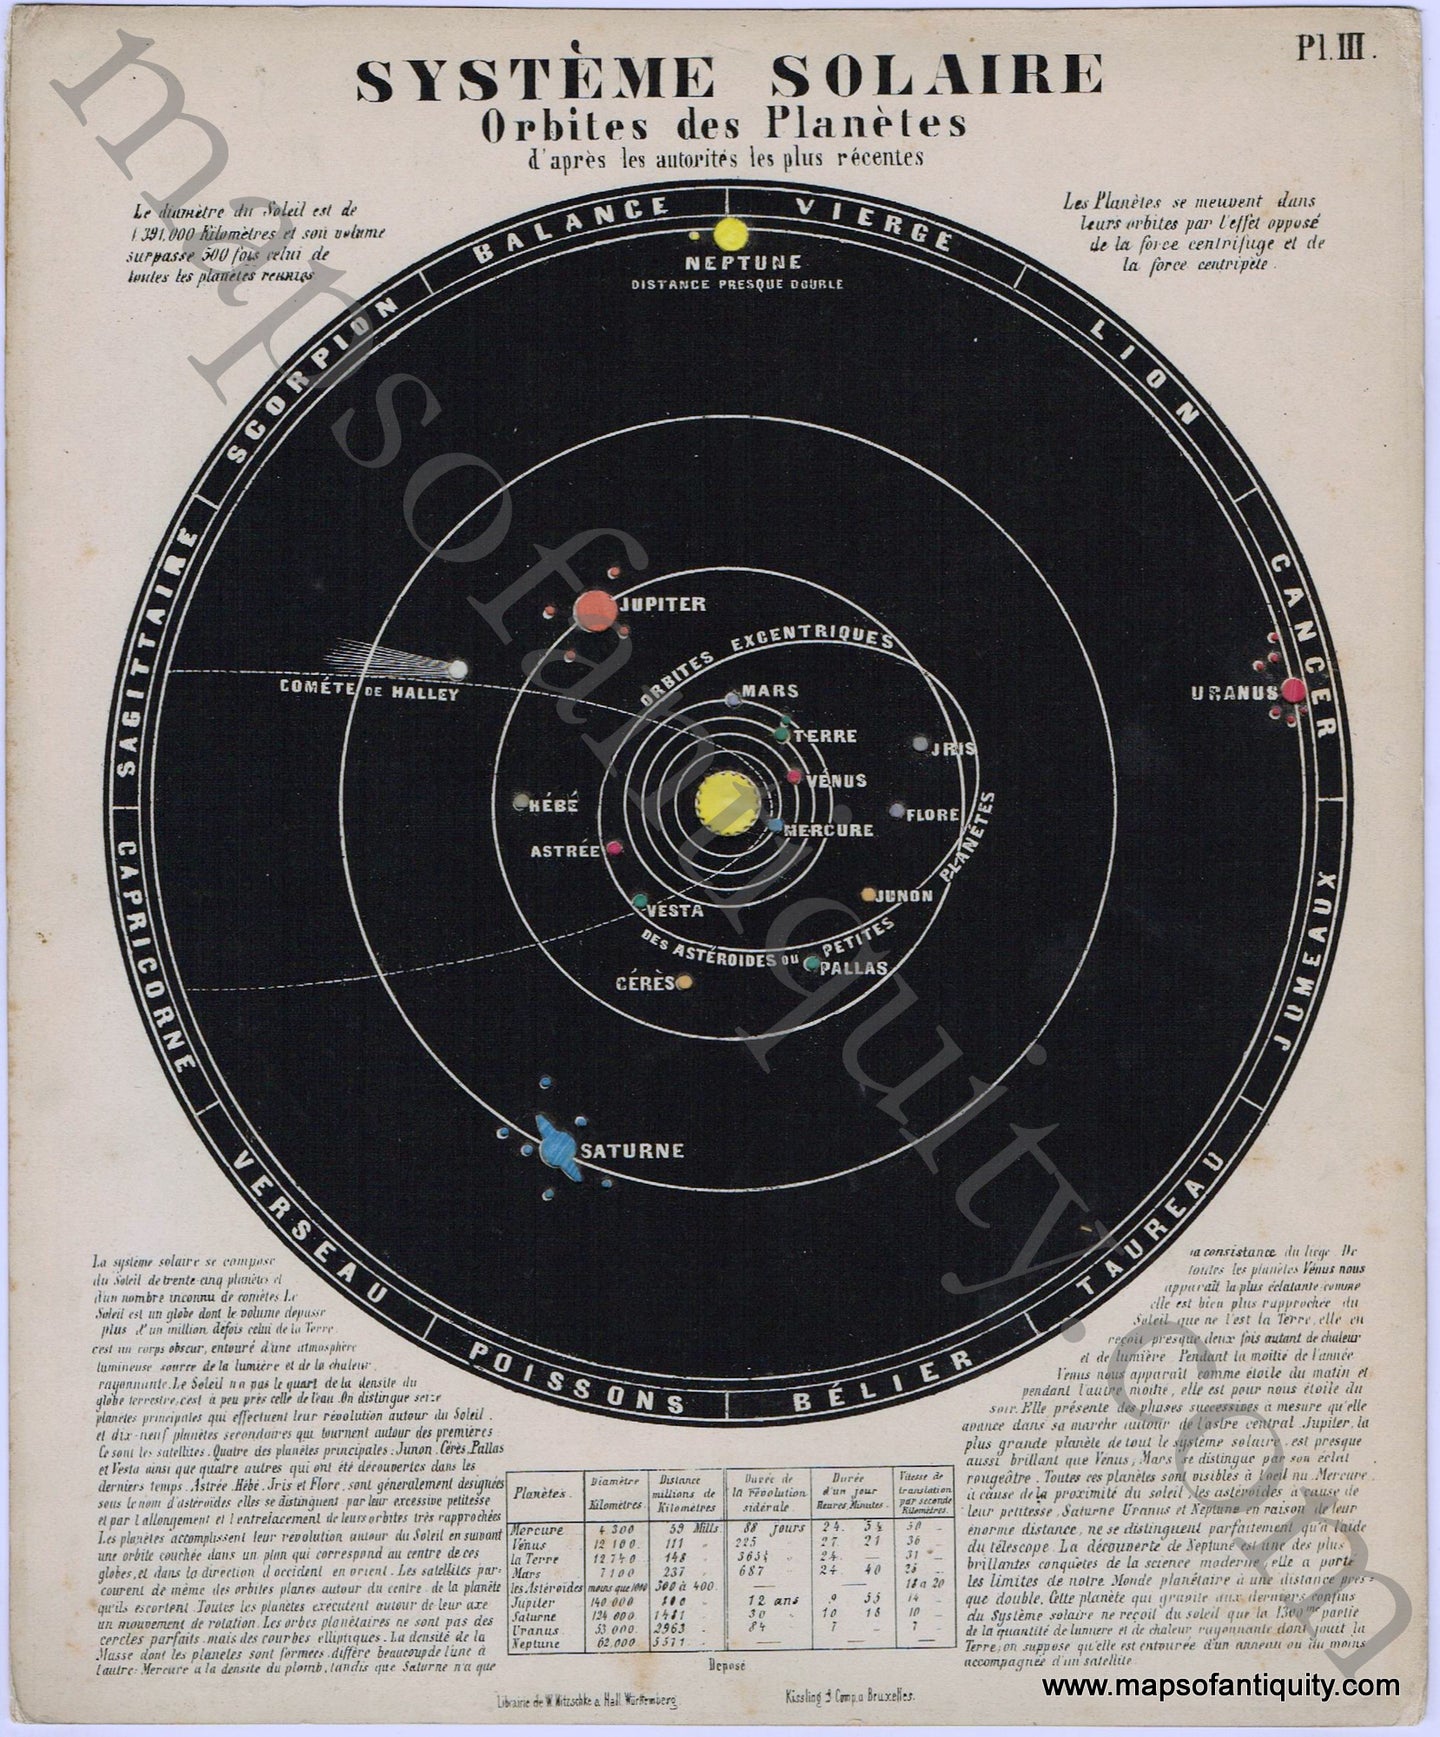 Antique-Map-systeme-solaire-orbites-des-planetes-celestial-print-earth-1862-Nitzschke-Bilder-Atlas-1860s-1800s-19th-century-Maps-of-Antiquity